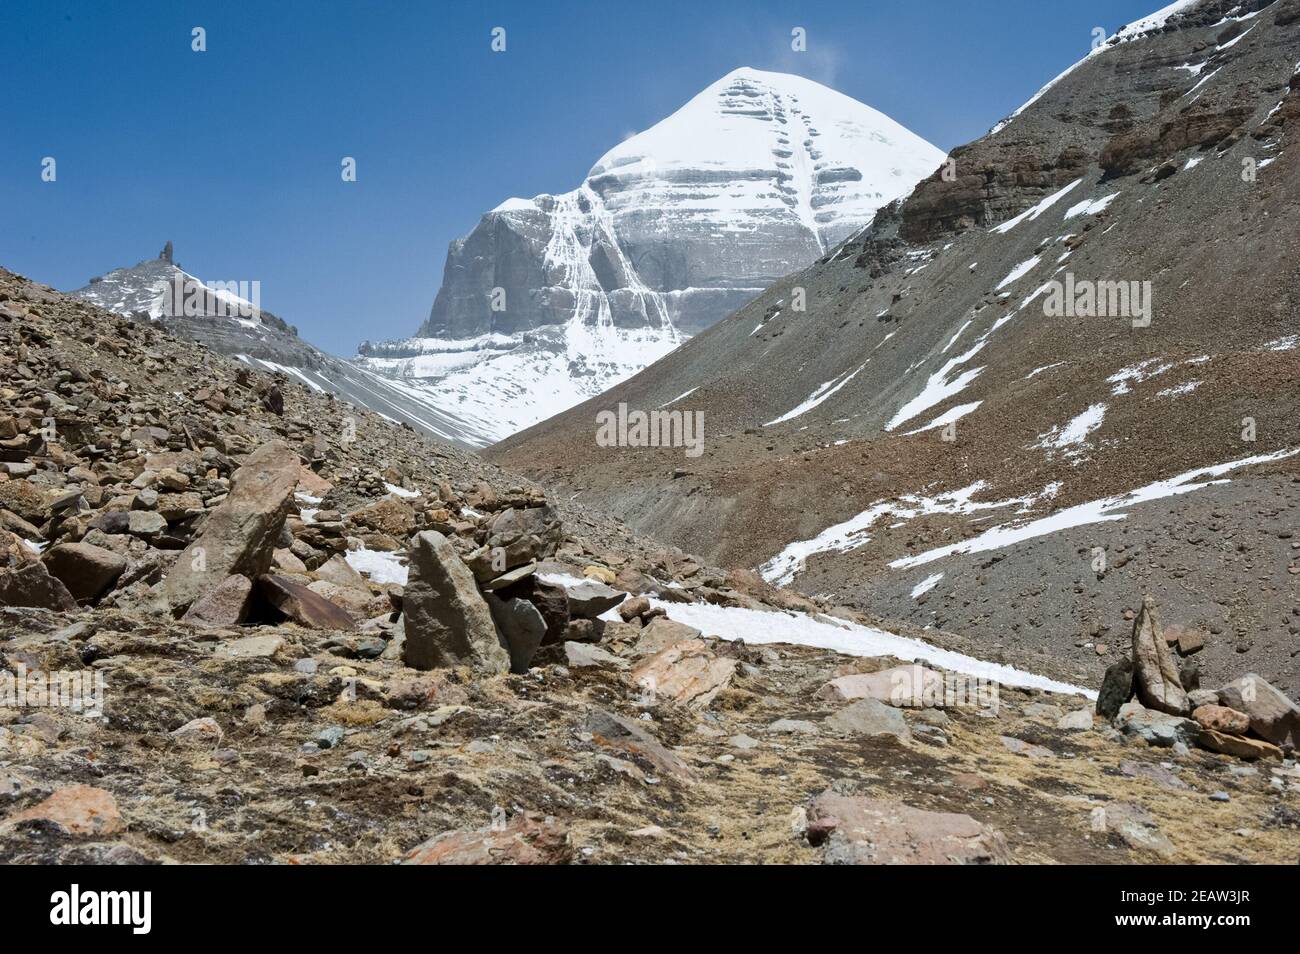 Sacred Mount Kailas in Tibet. Himalayas mountains. Stock Photo